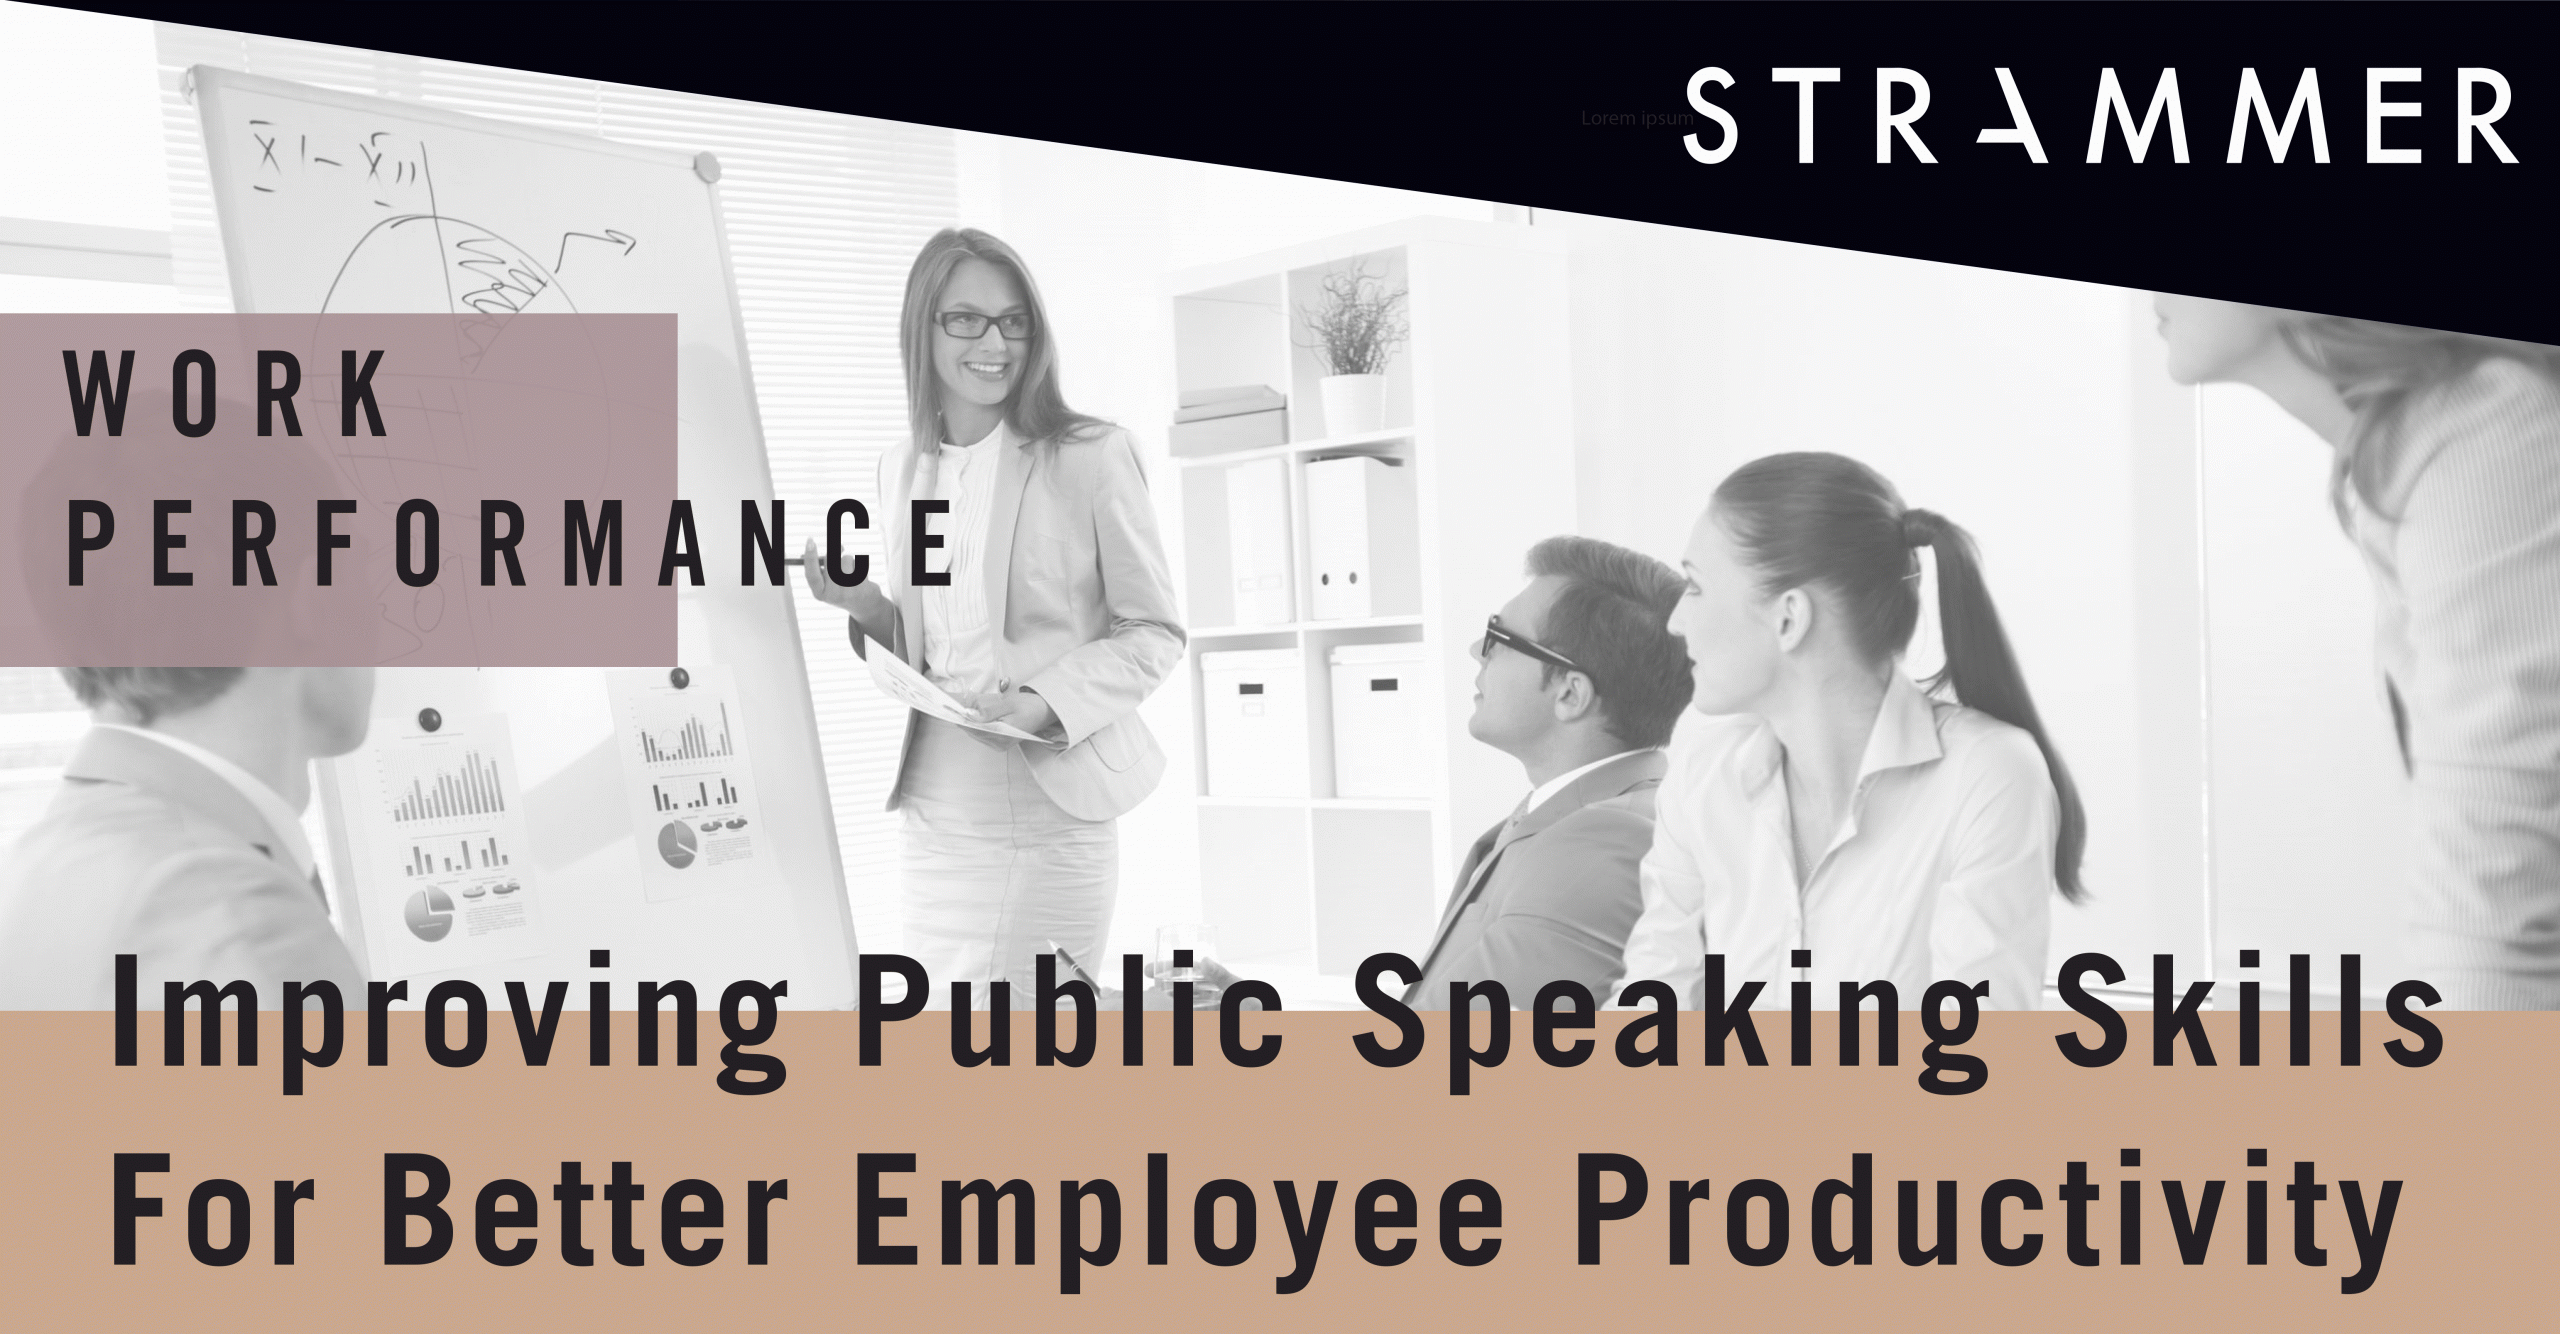 Public Speaking Skills Importance at Work